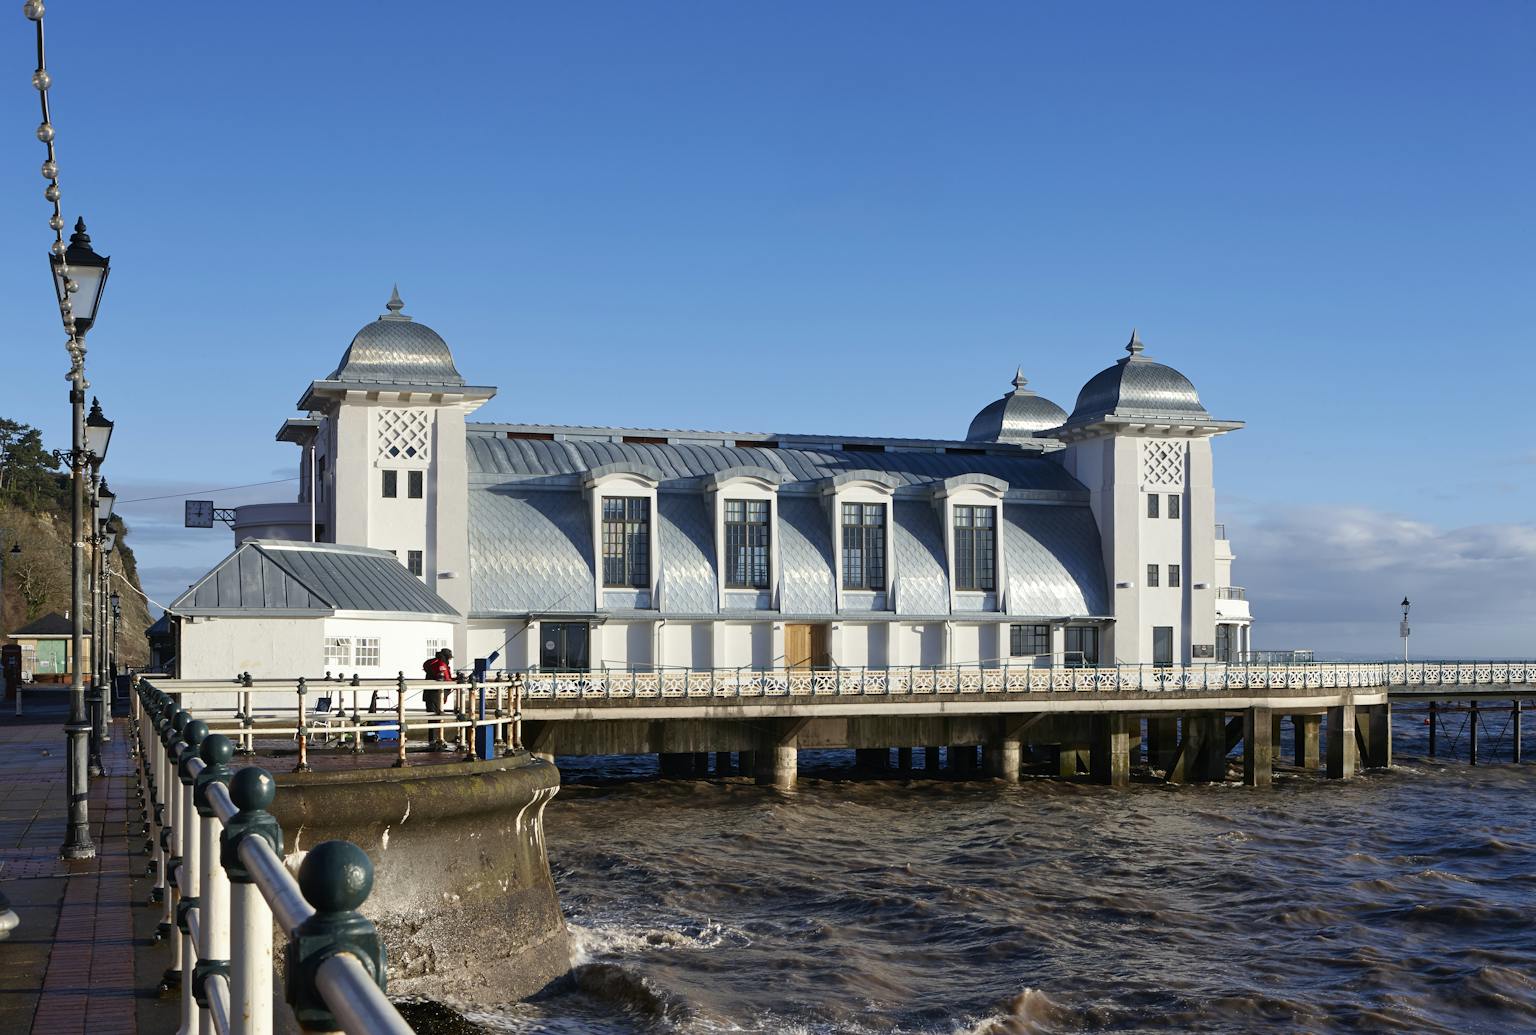 The Art Deco Penarth Pier Pavilion in Wales